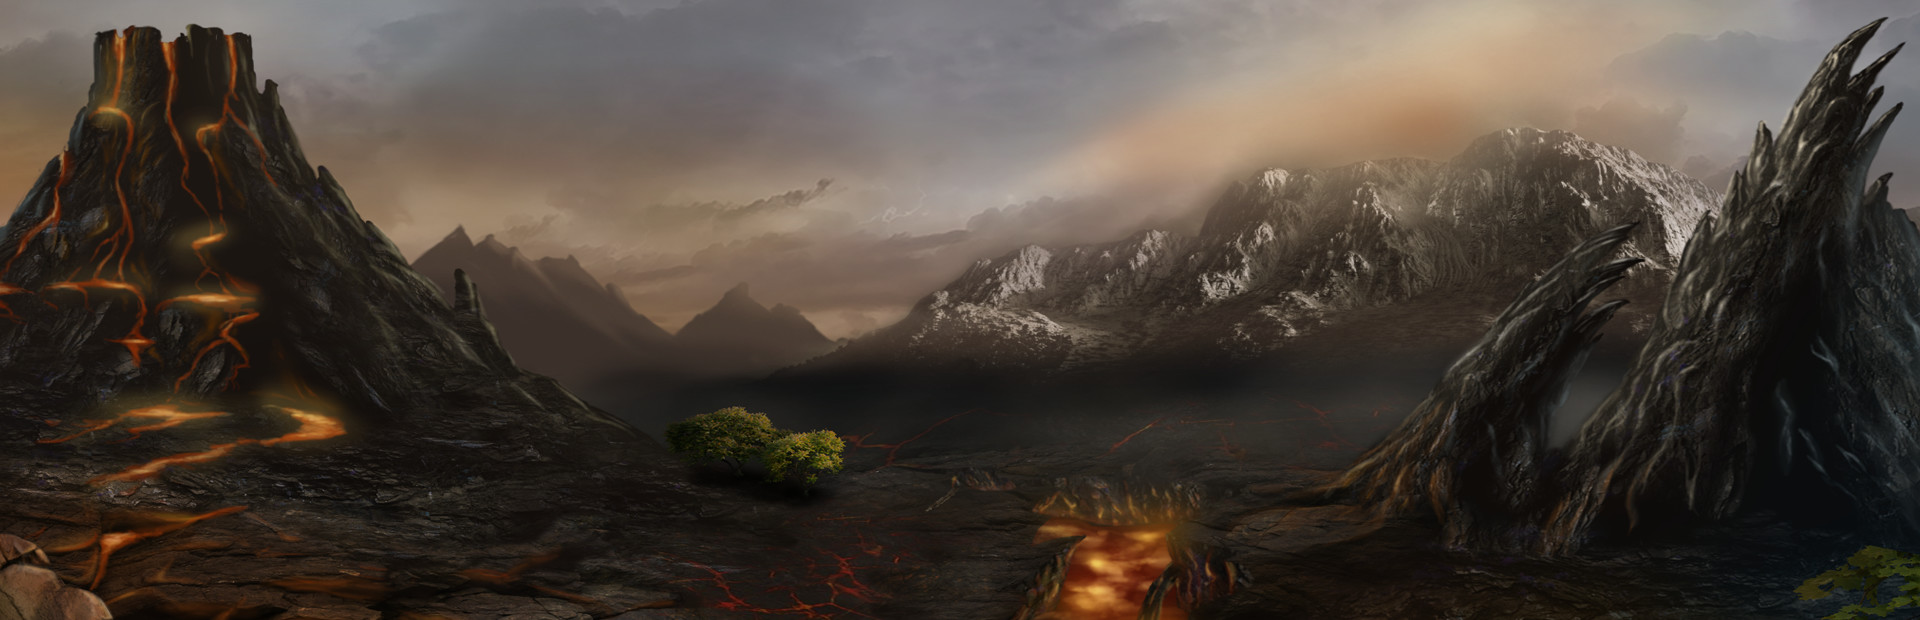 Mystika 3 : Awakening of the dragons cover image